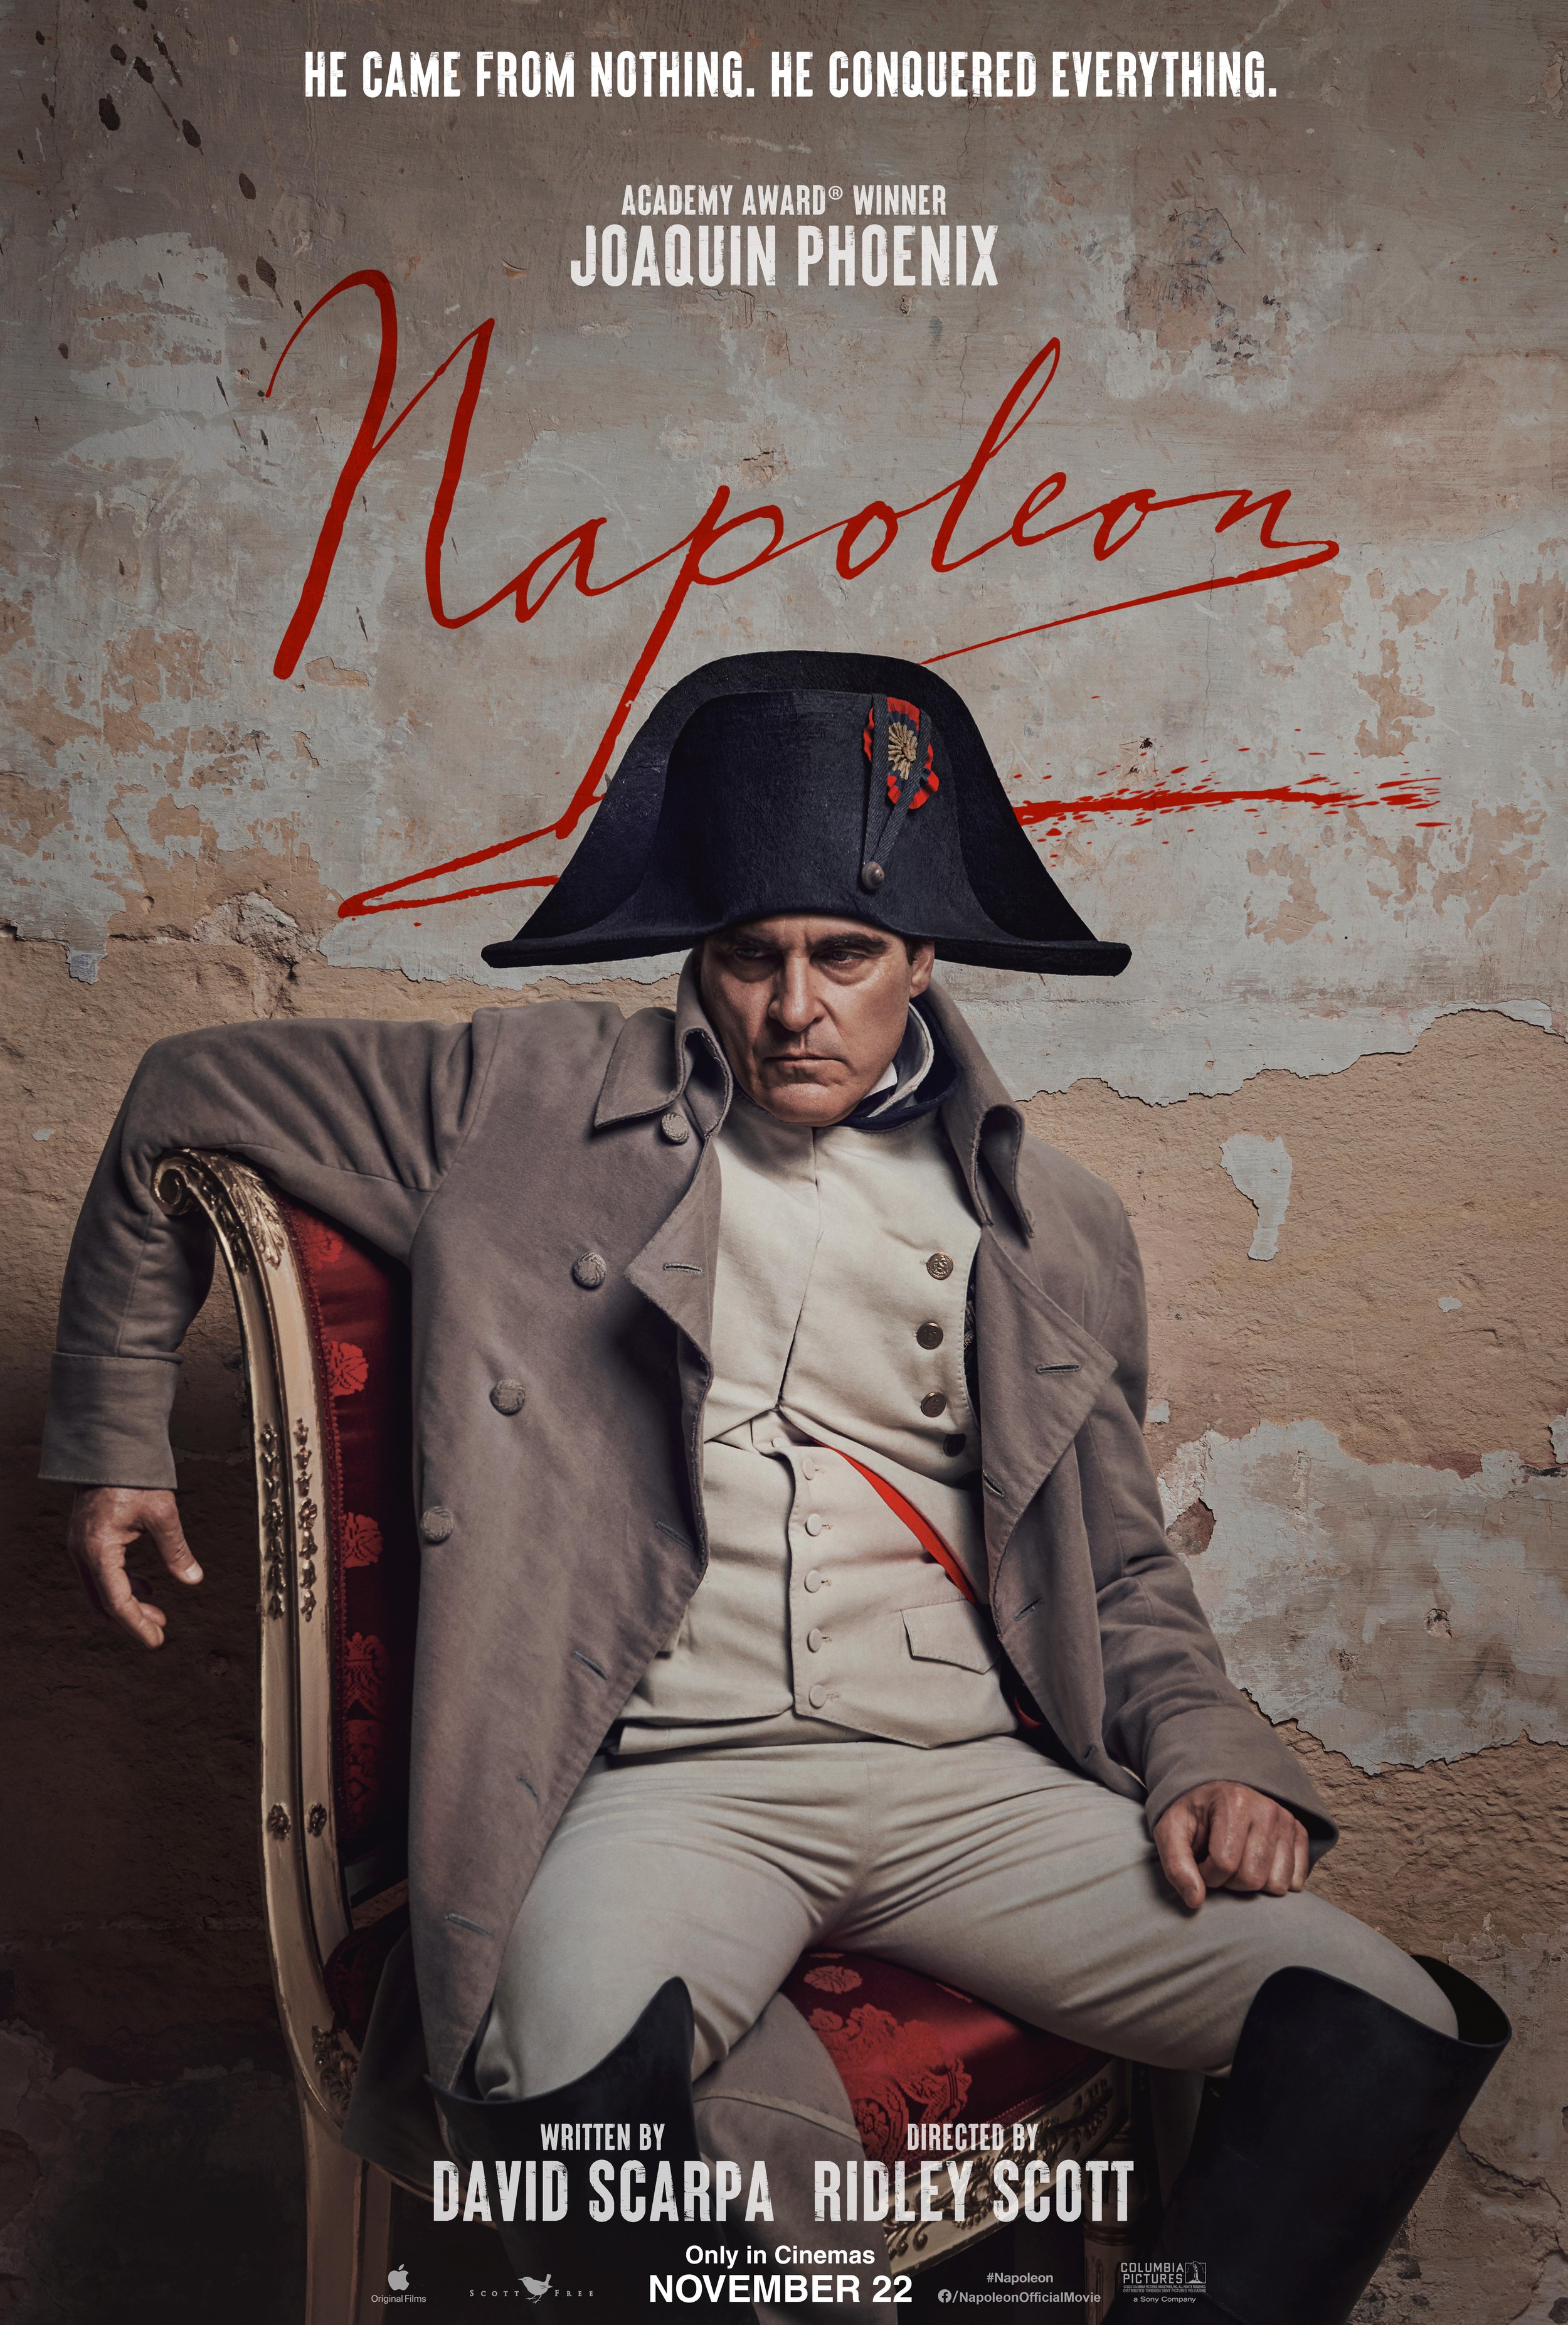 Napoleon images © Columbia Pictures